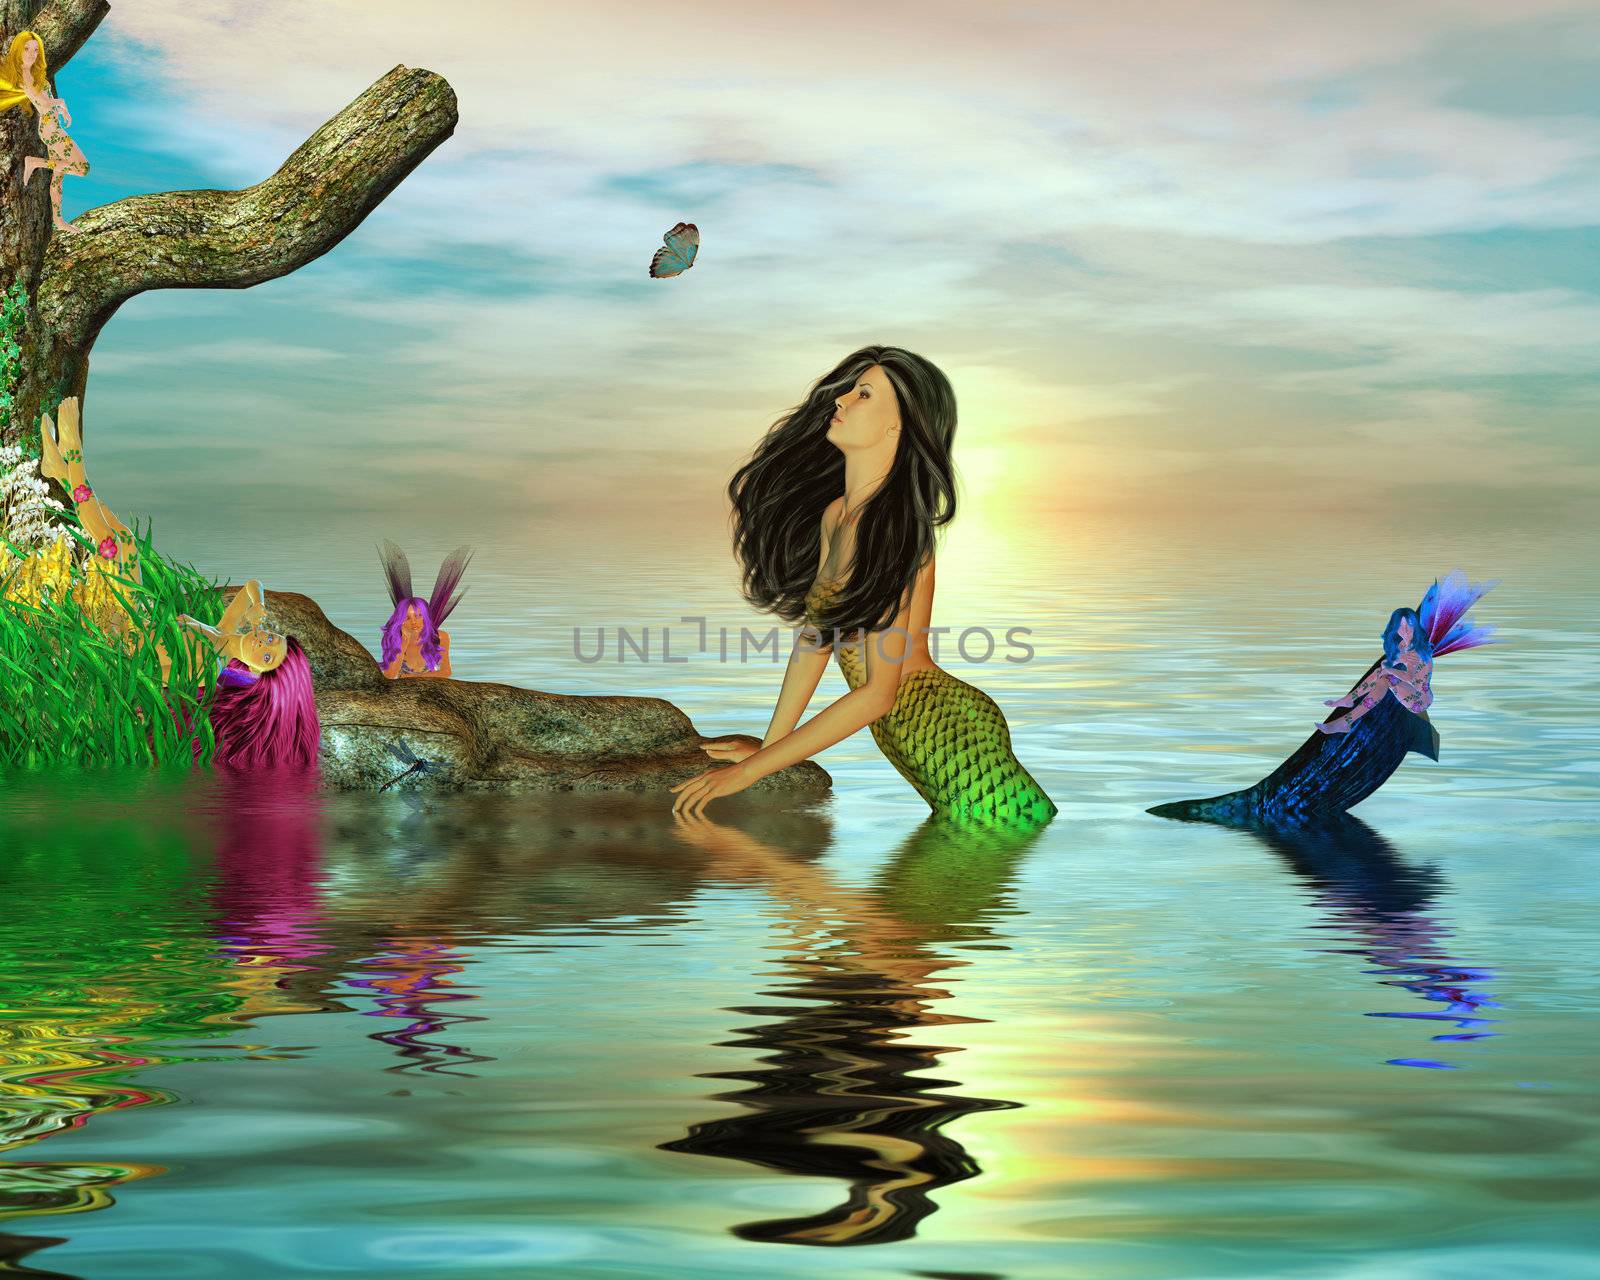 Mermaid surrounded by fairys in the ocean